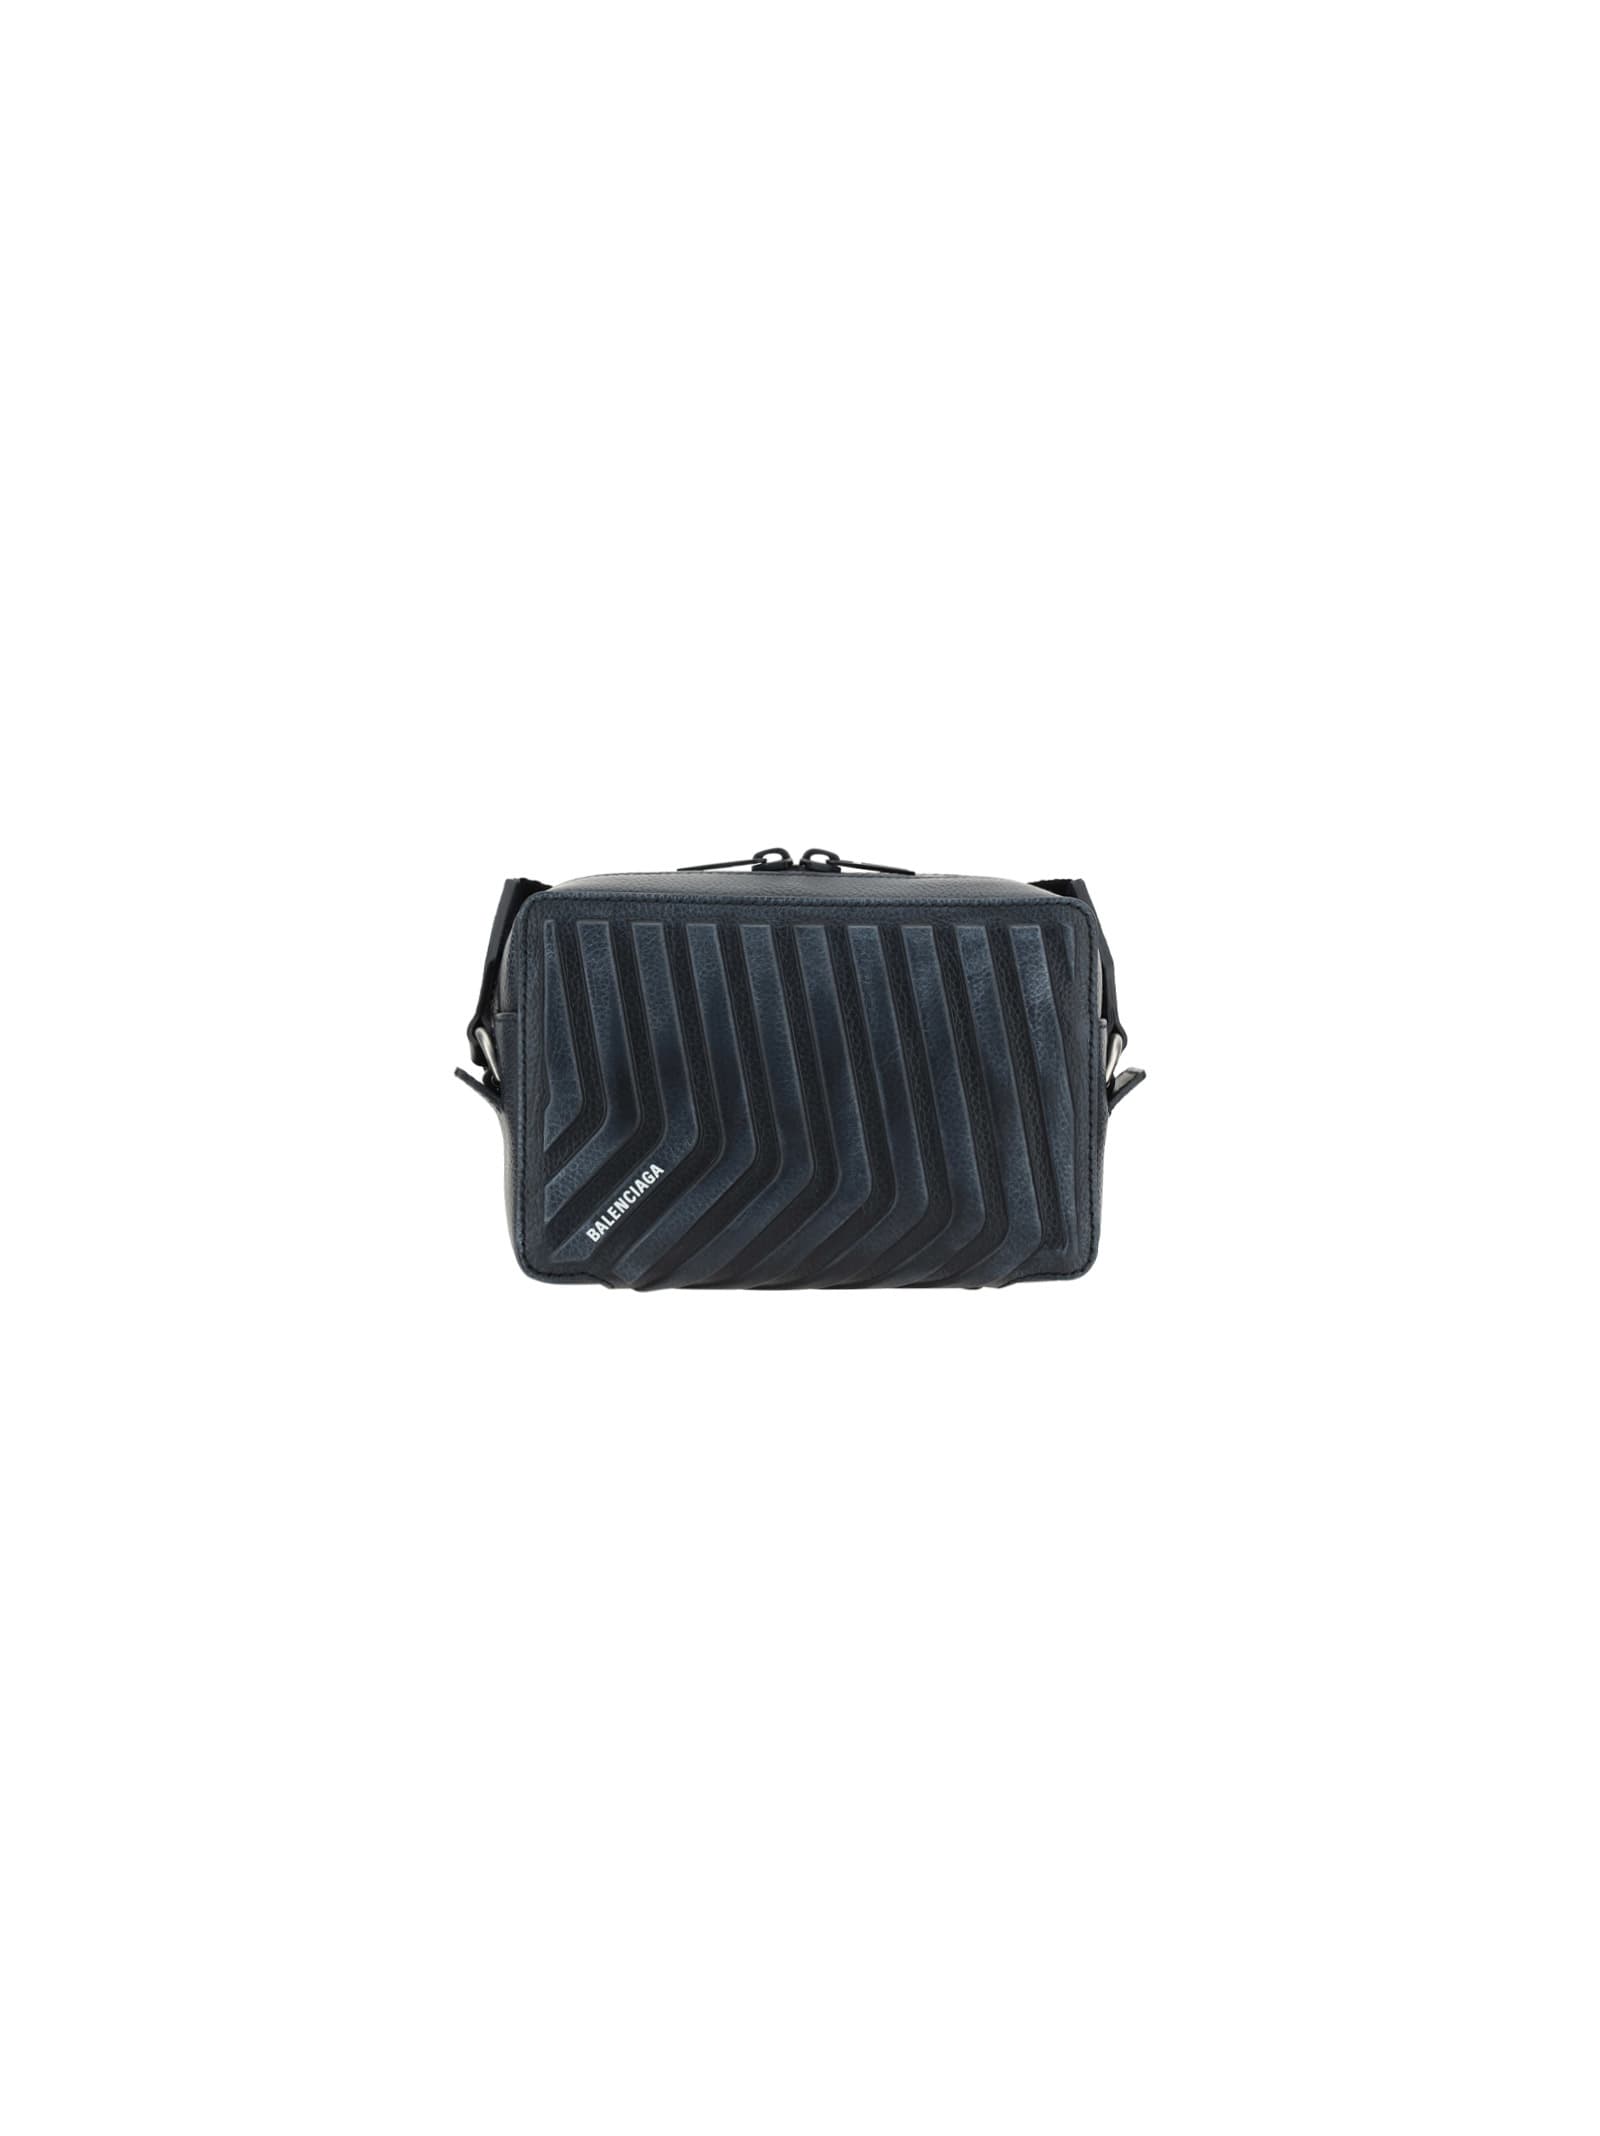 Balenciaga Car Camera Shoulder Bag In Black/white Dirt | ModeSens